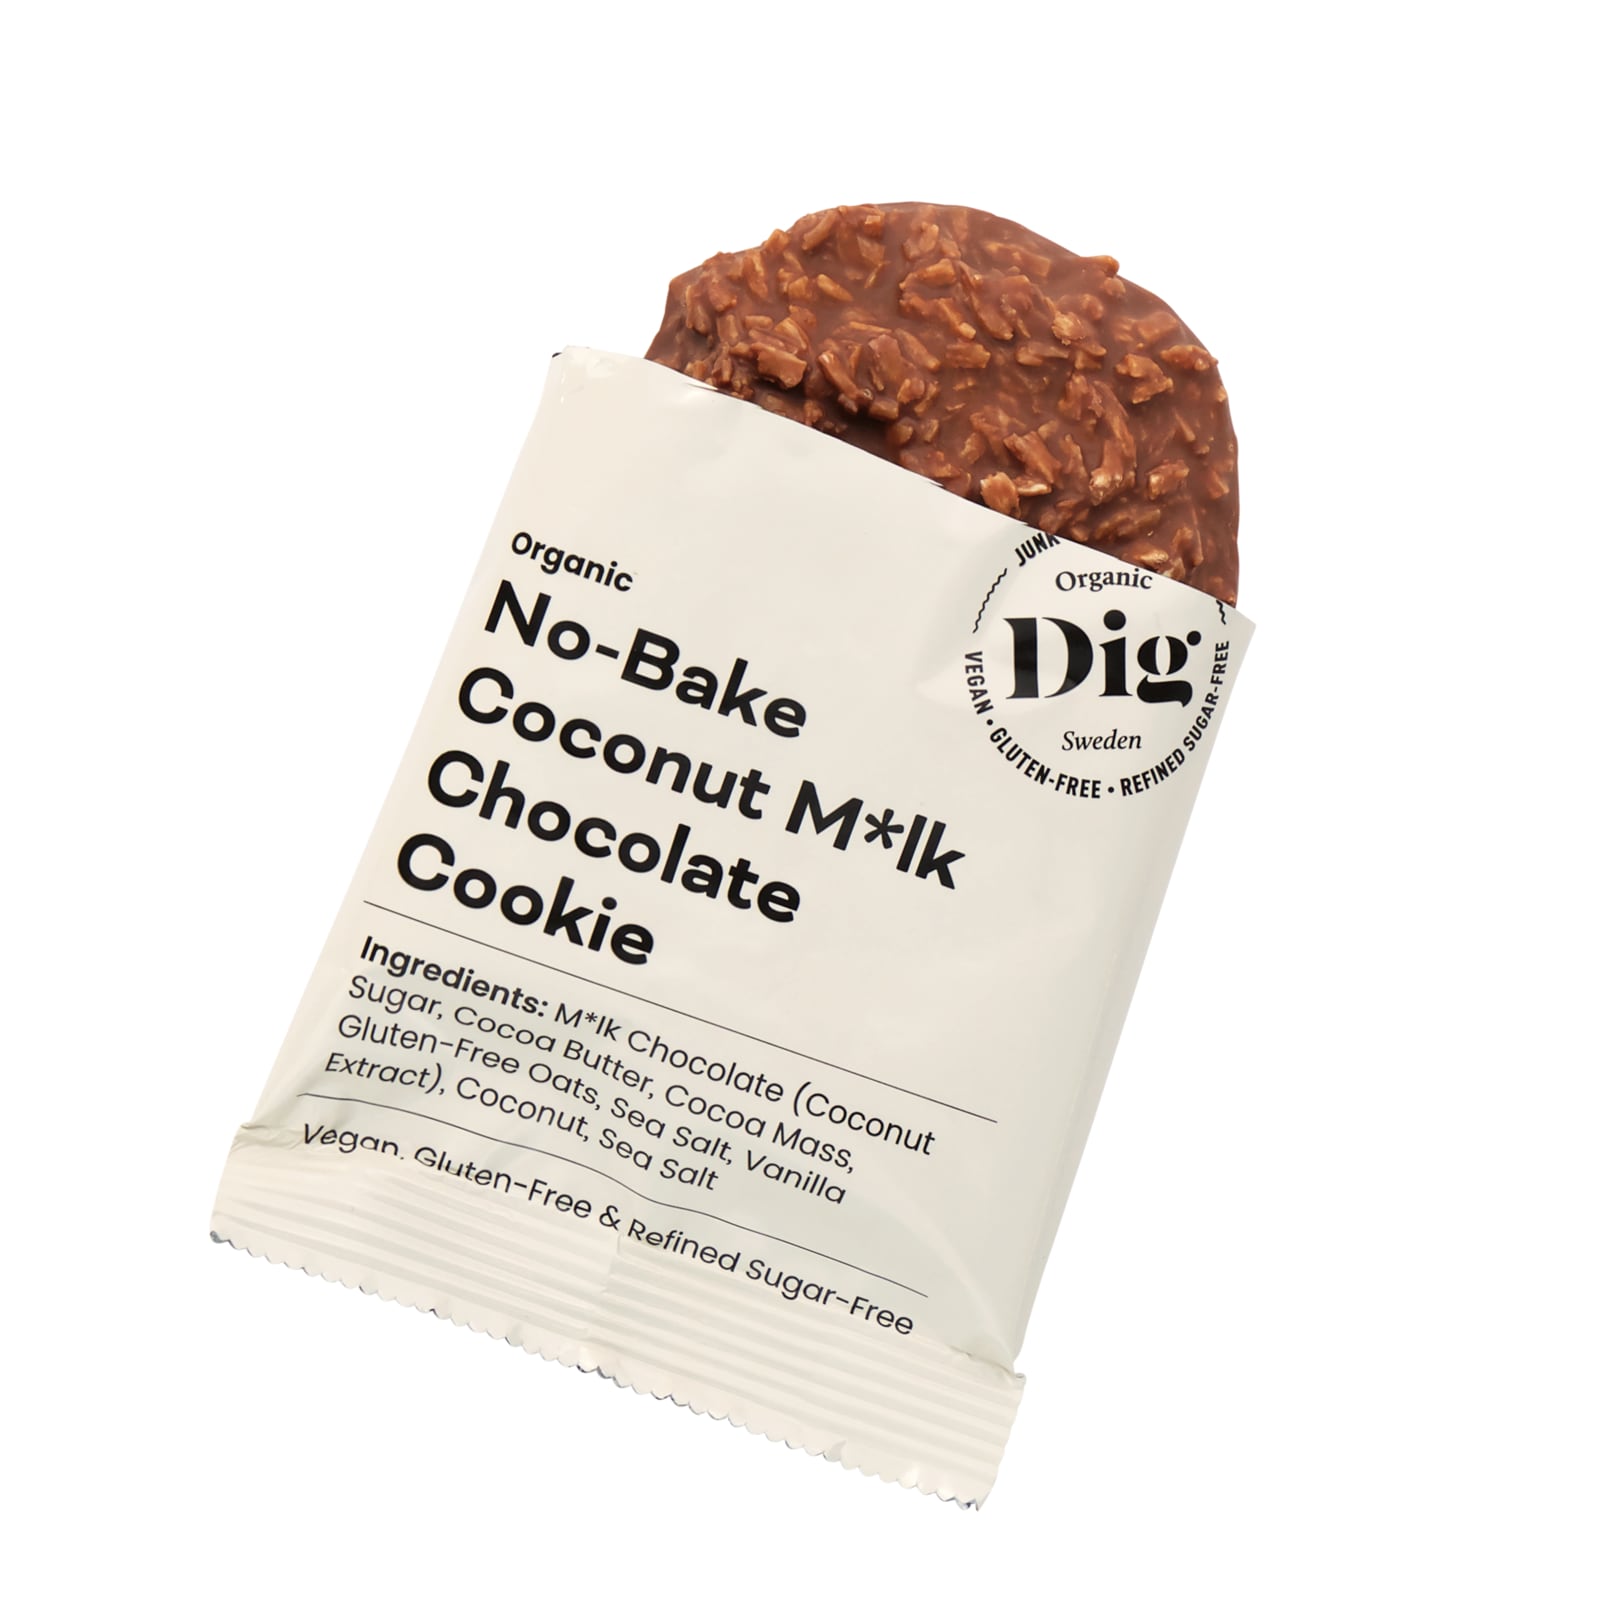 Dig Coconut Milk Chocolate Cookie